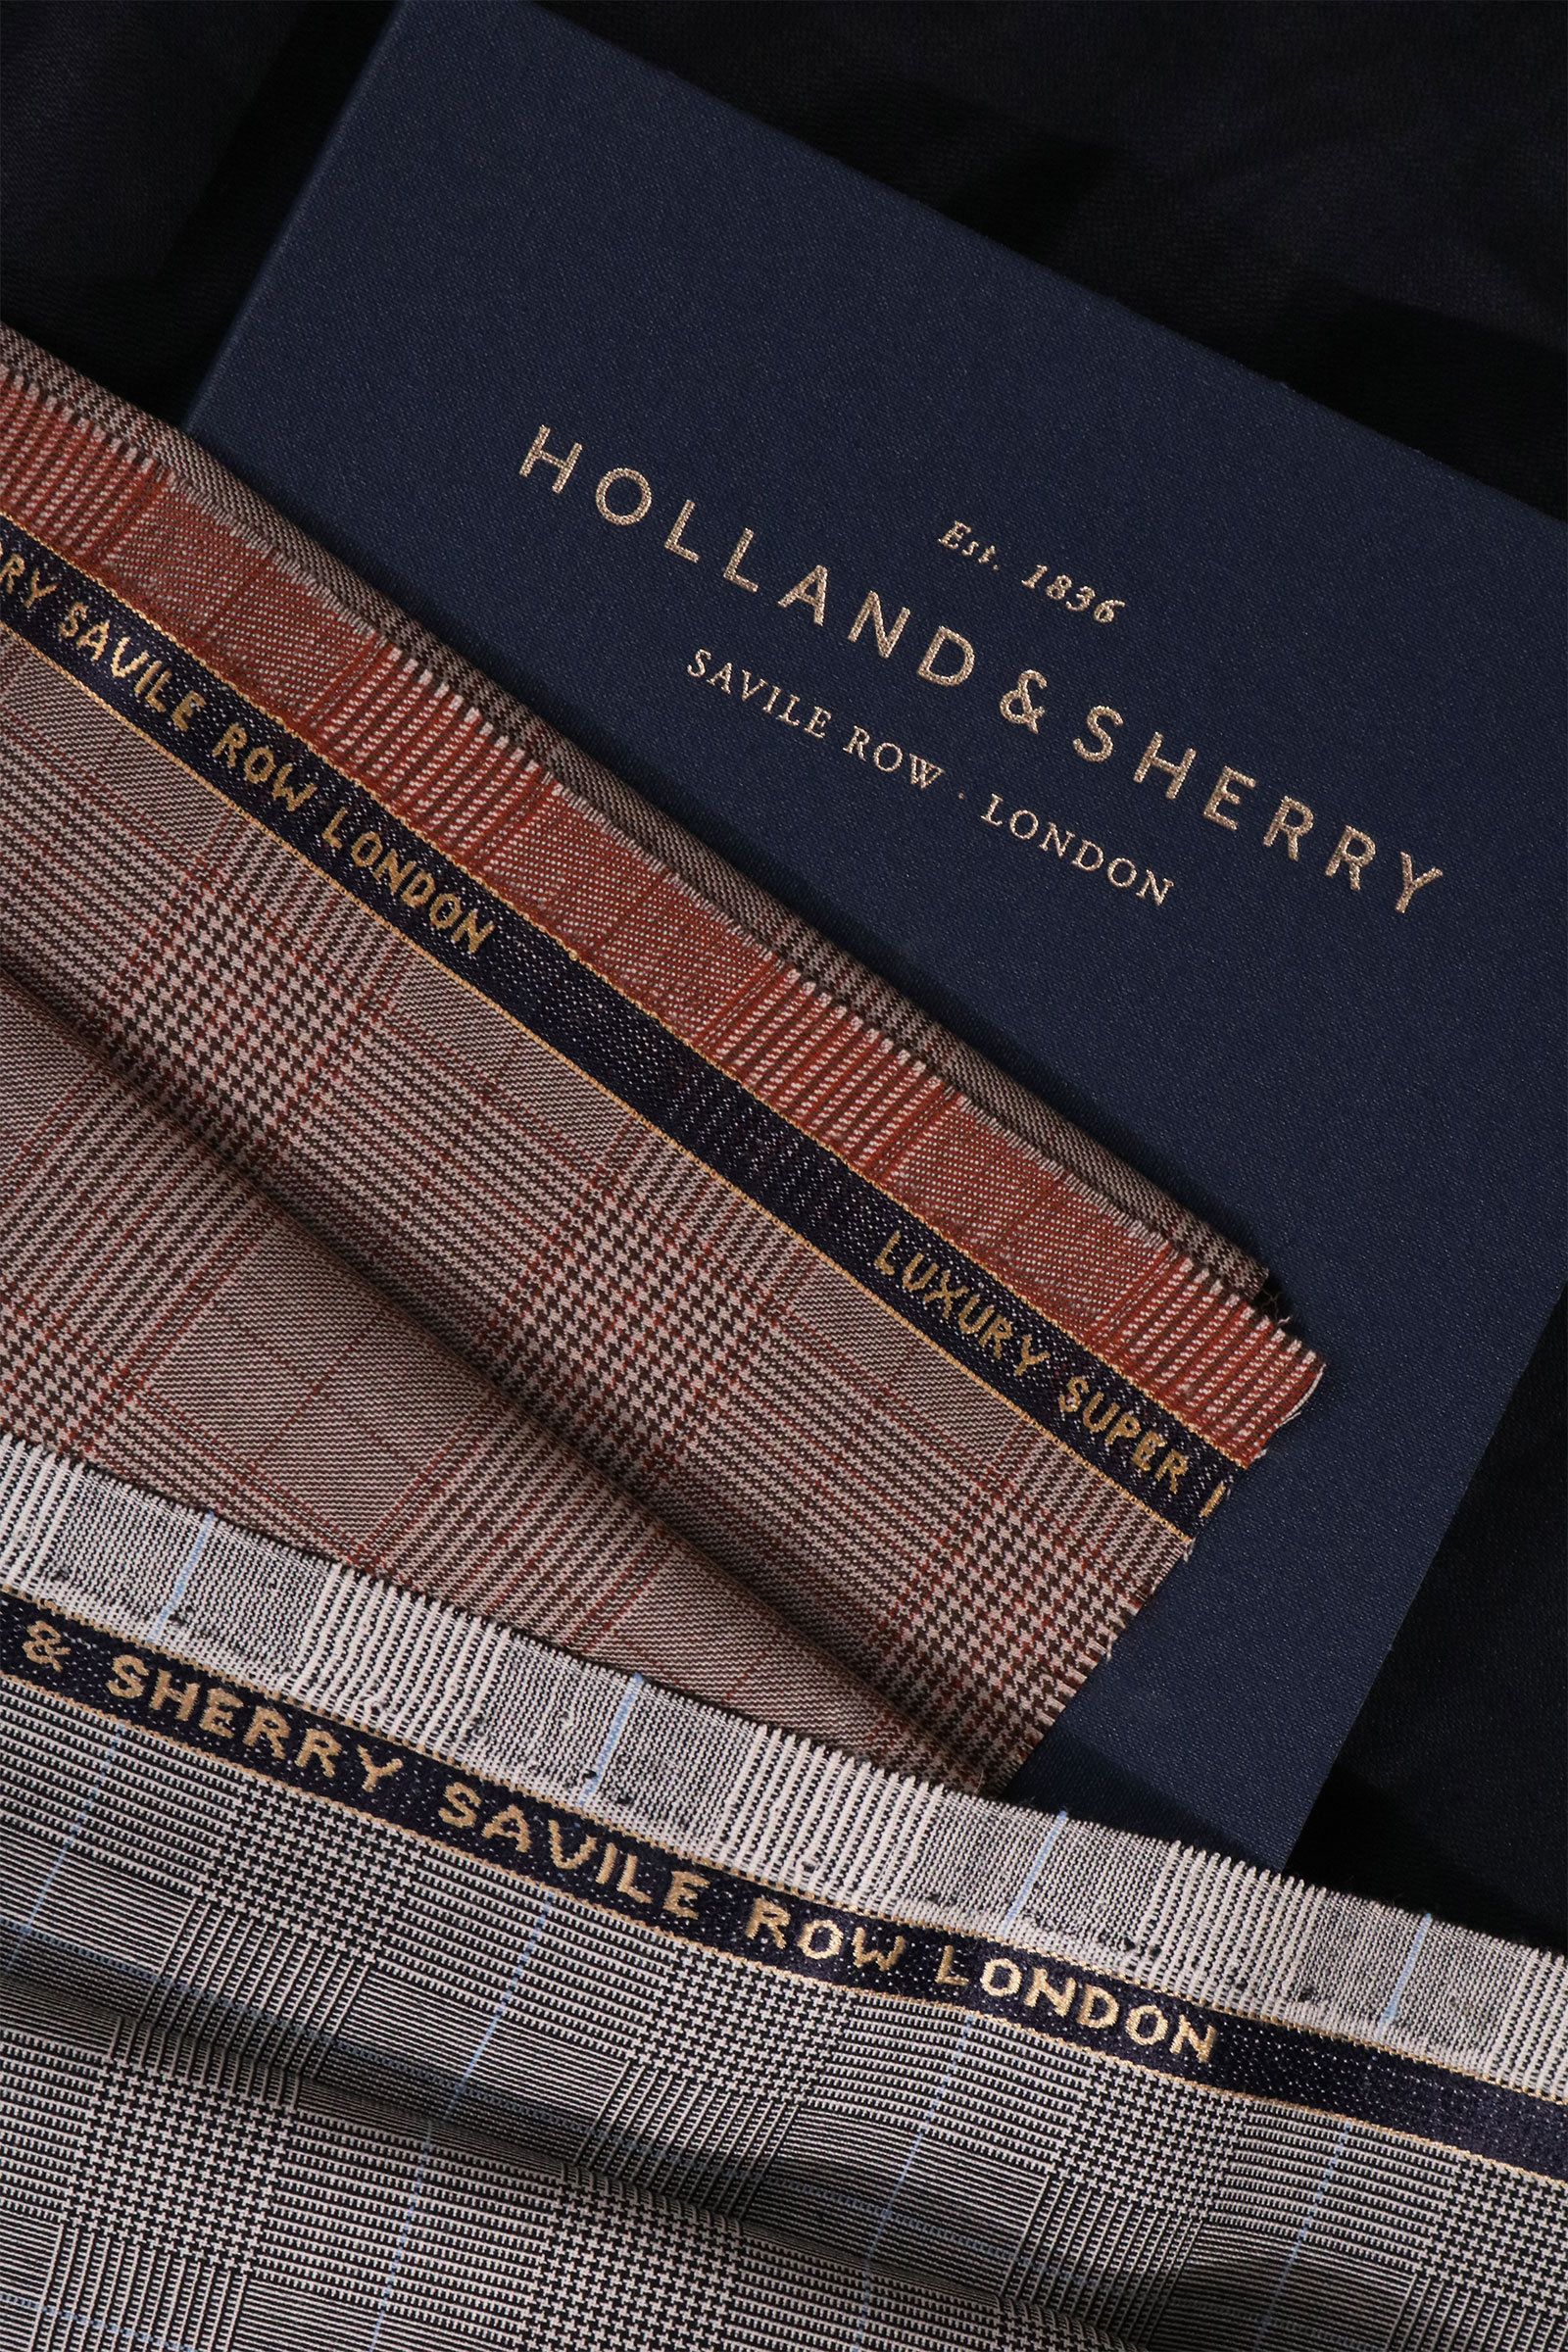 Holland & Sherry fabrics